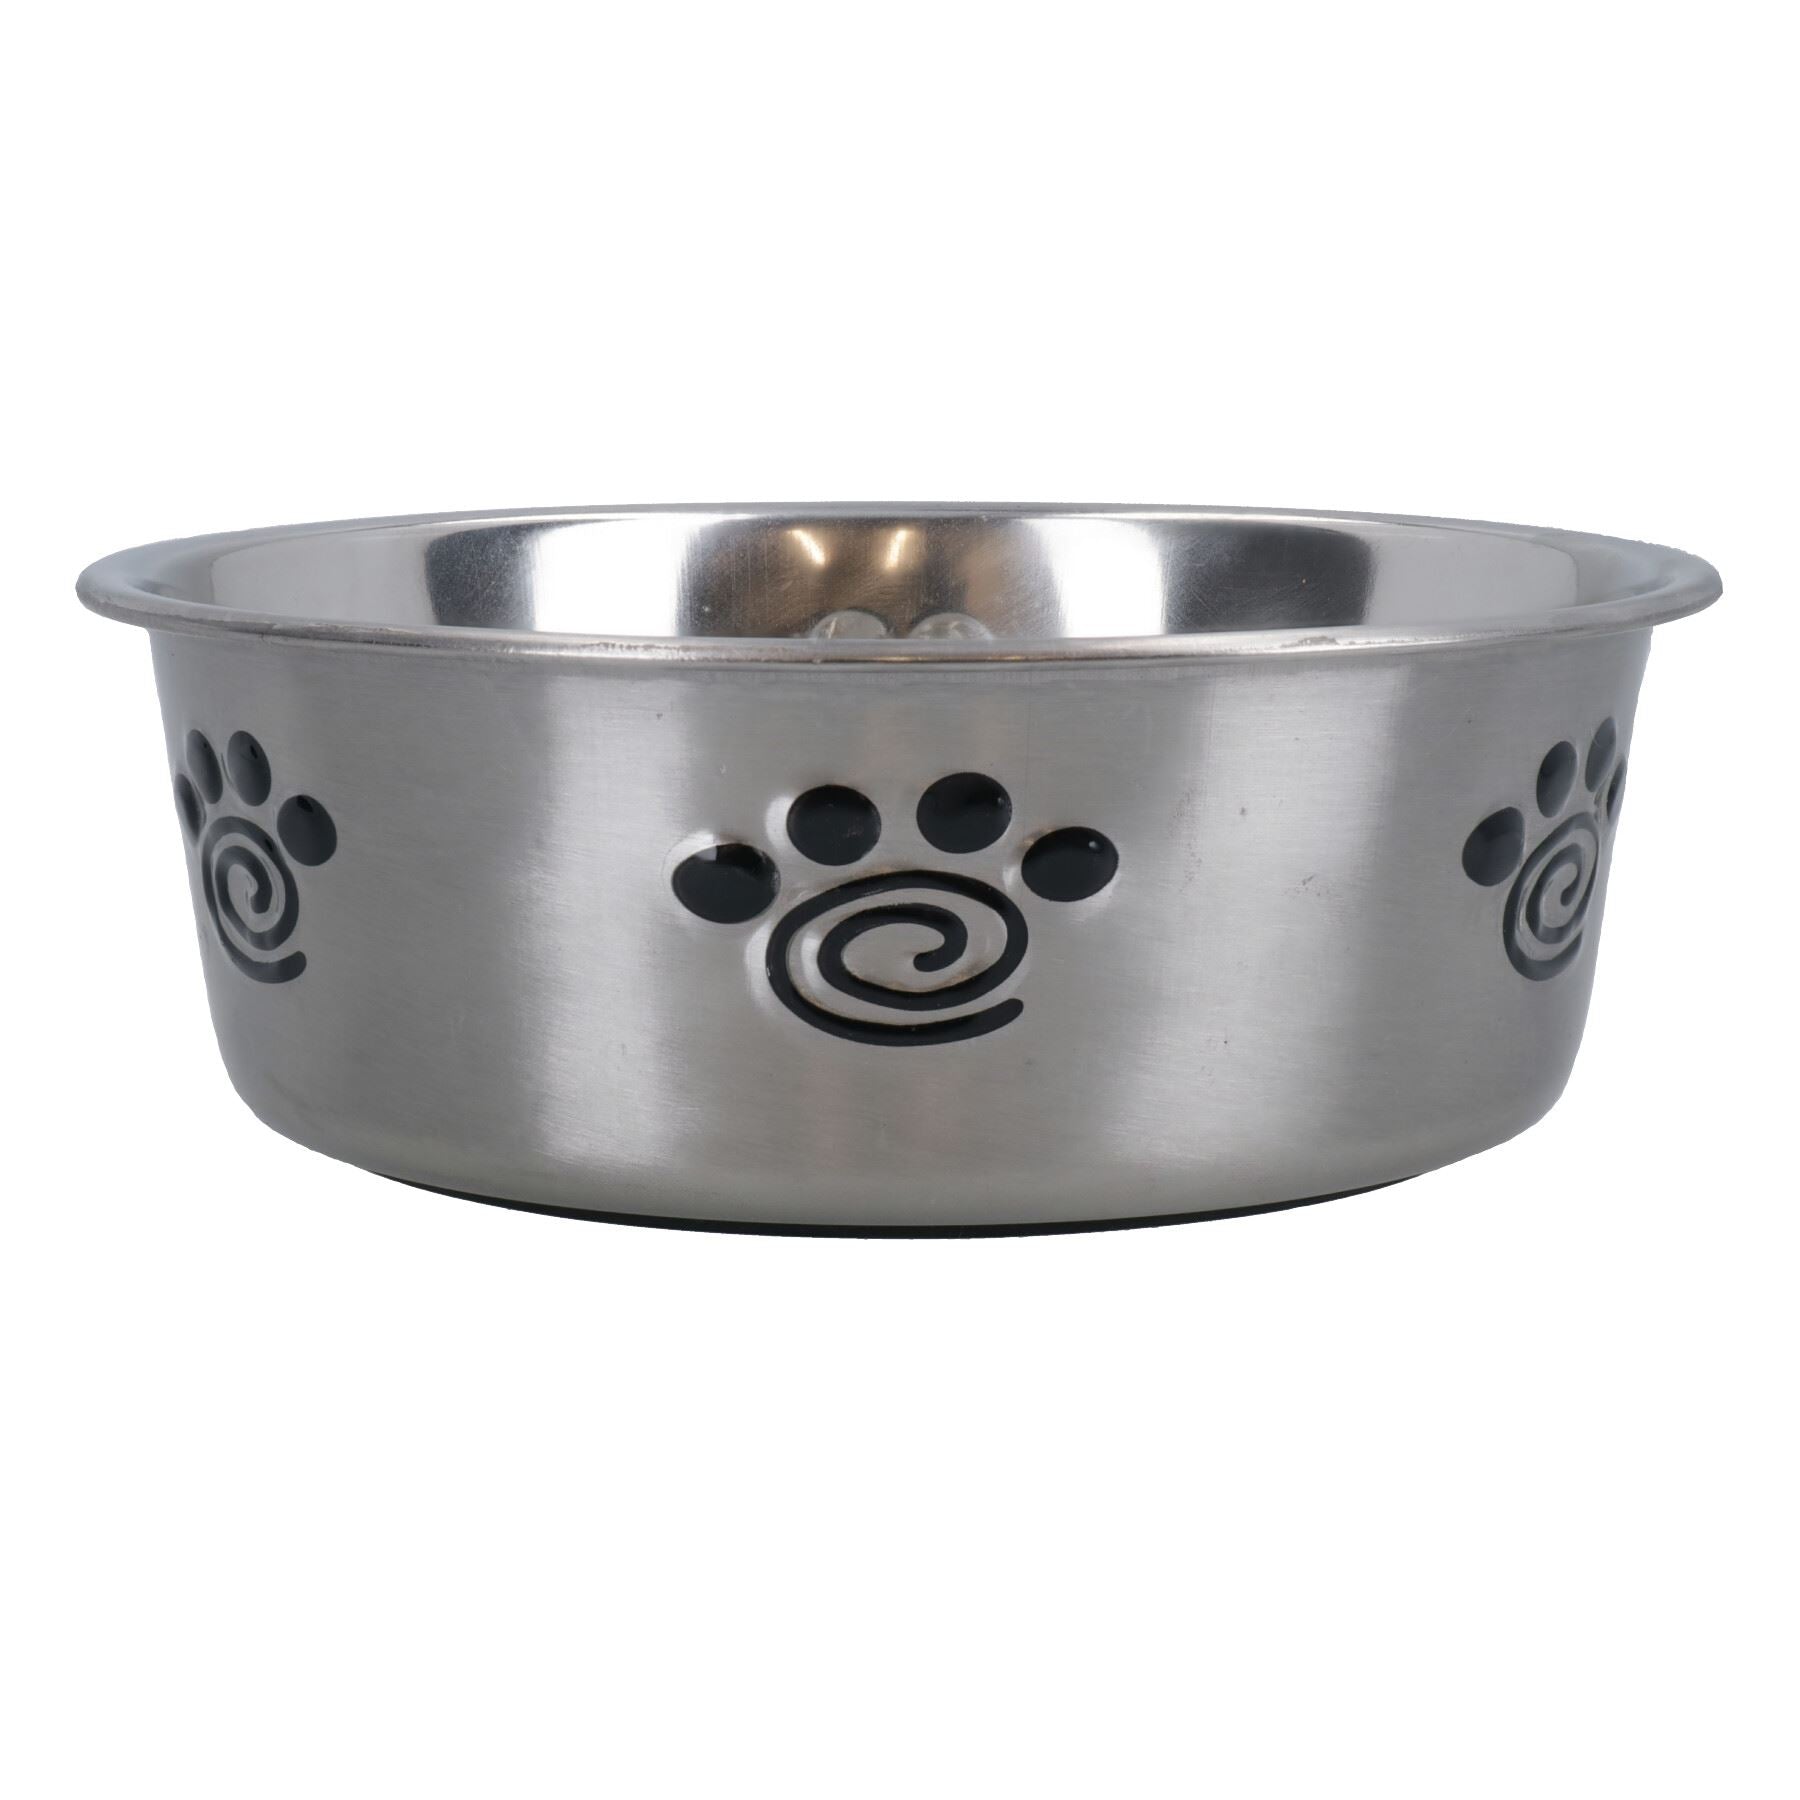 1 Heavy Duty Non Slip Silver Paw Bowl Dog Puppy Feed Food Water Bowl 16cm